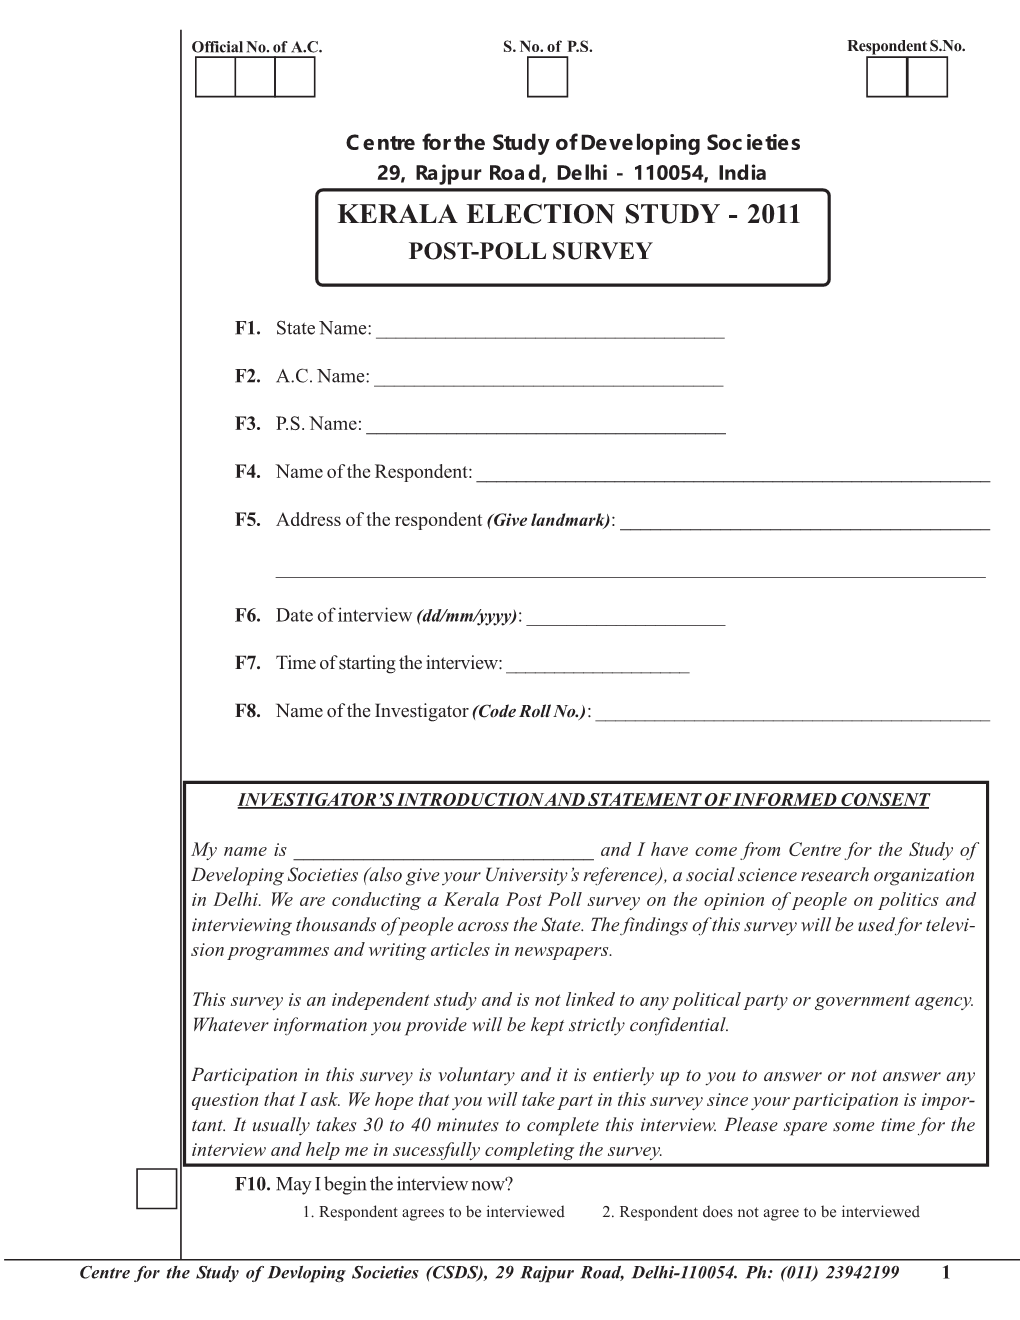 Kerala Post Poll 2011